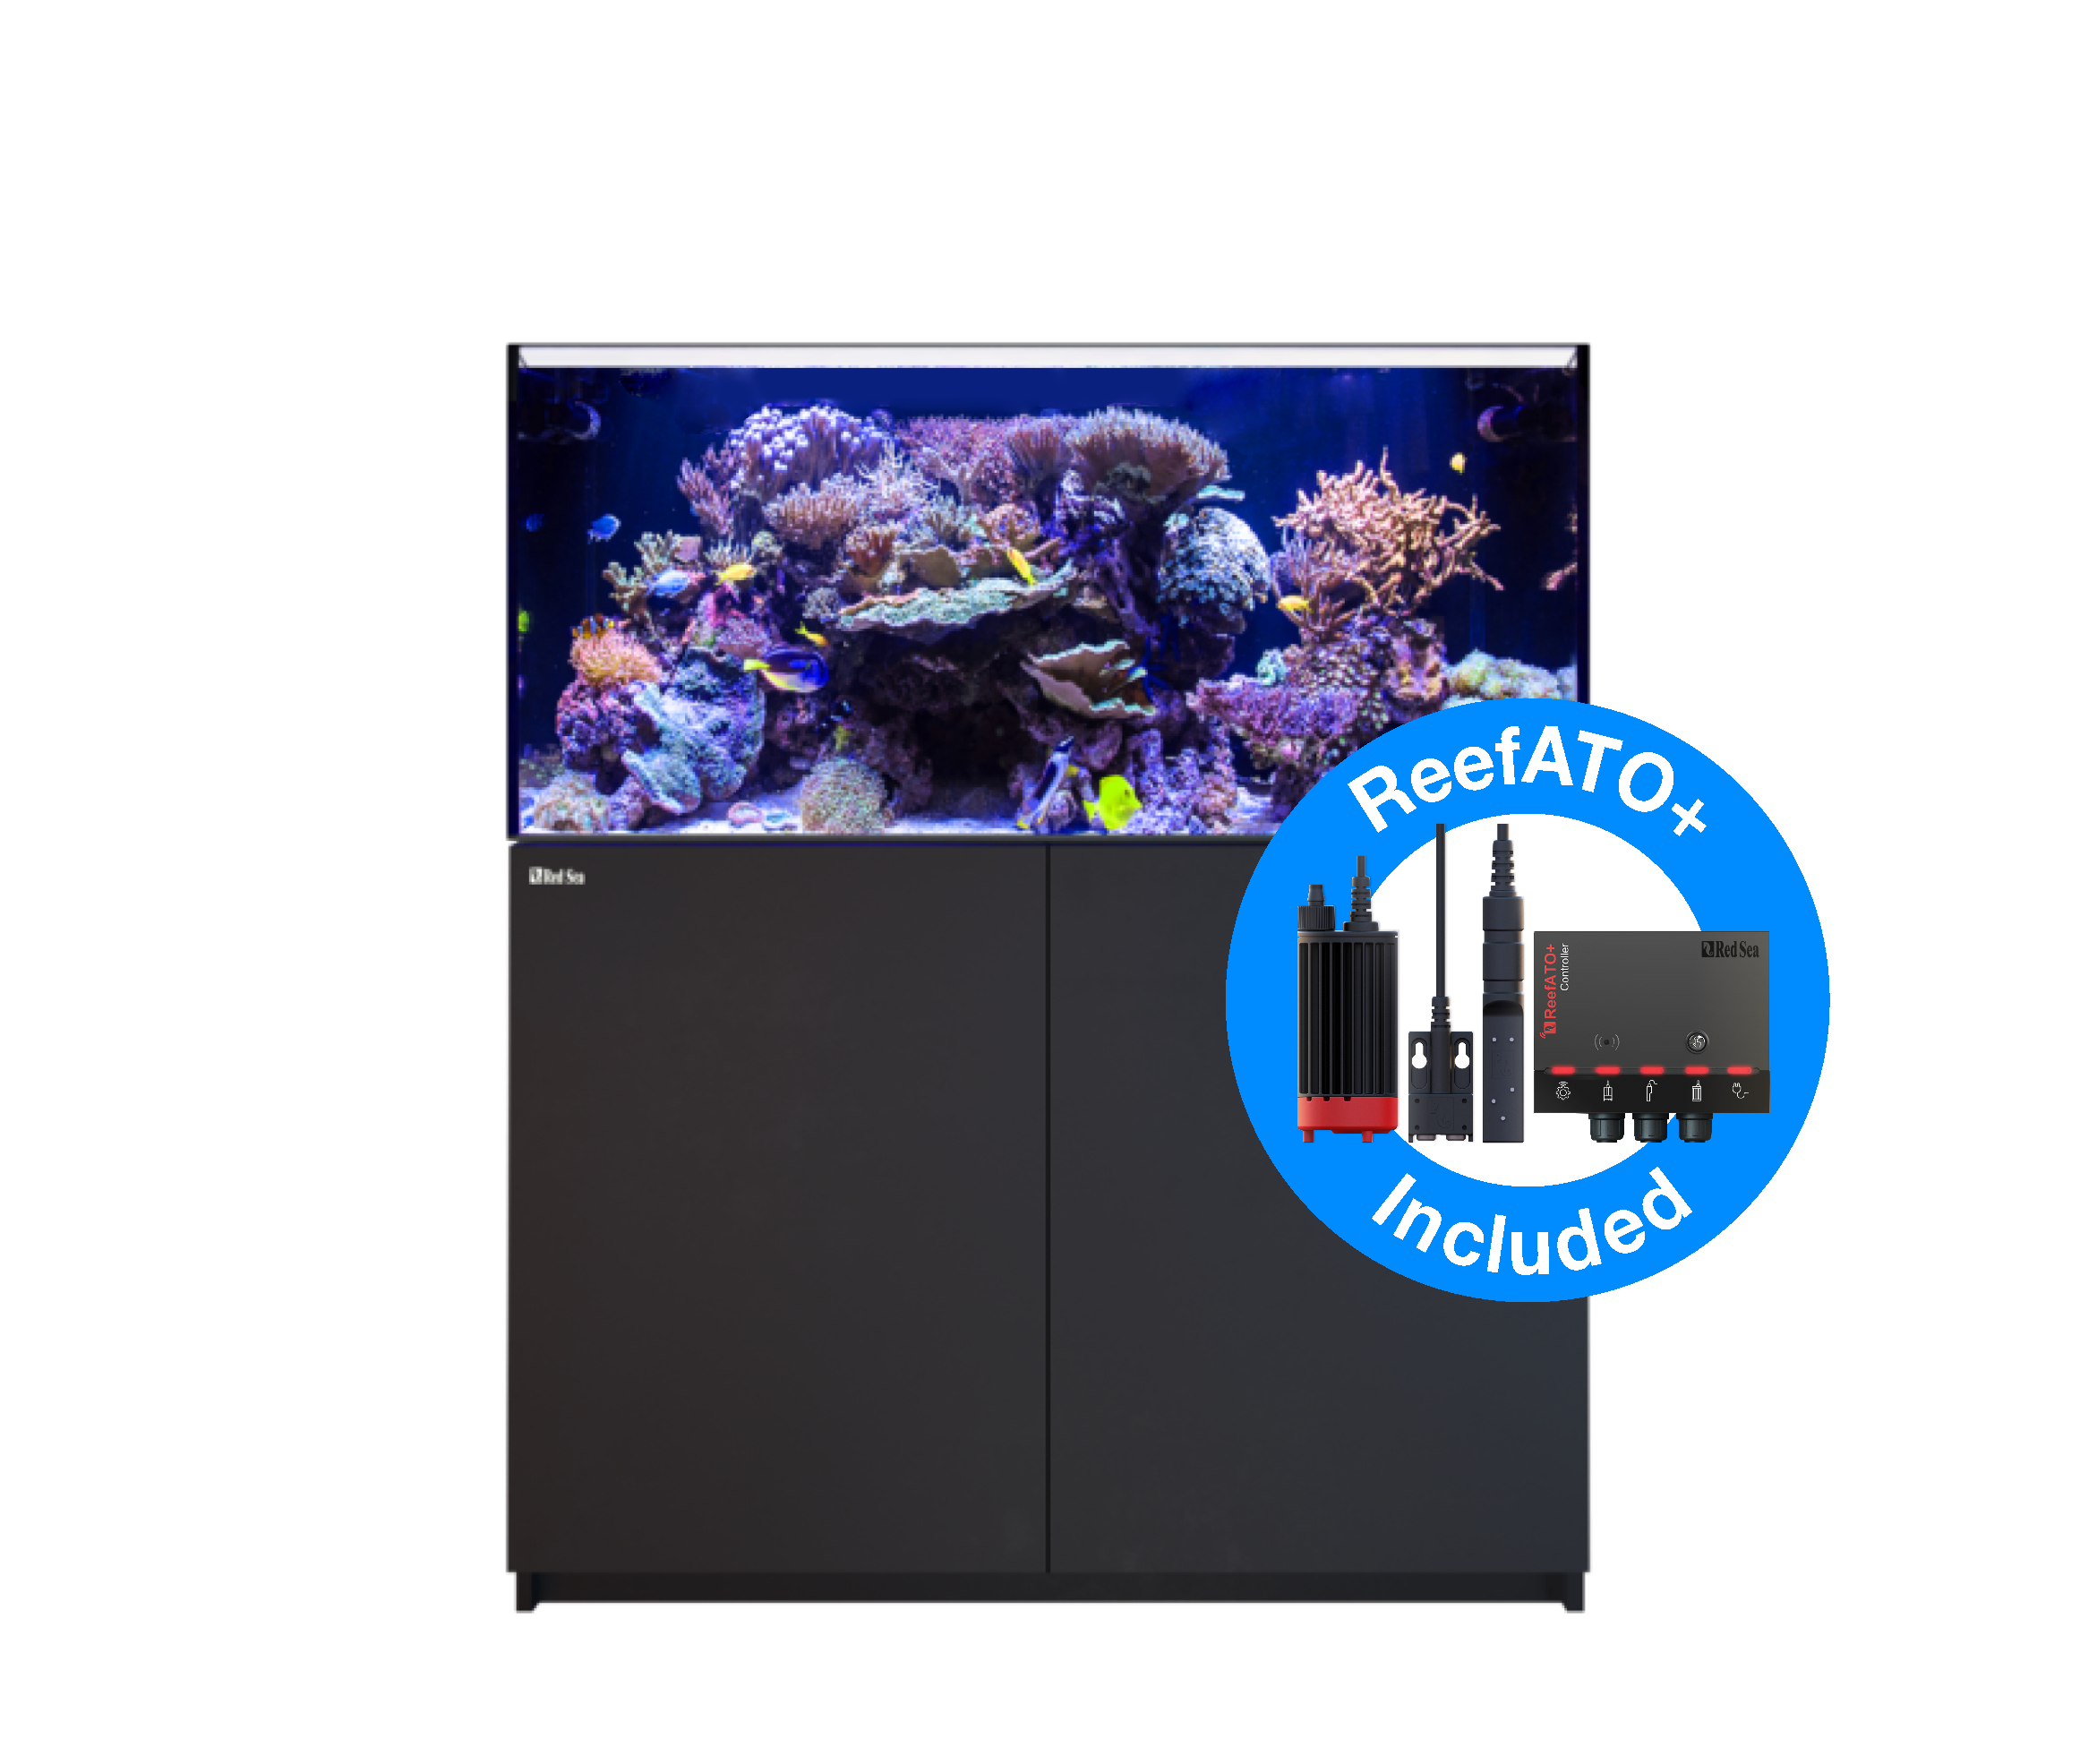 Red Sea Reefer G2+ XL 425 Deluxe Aquarium - Black (2 x ReefLED 90)